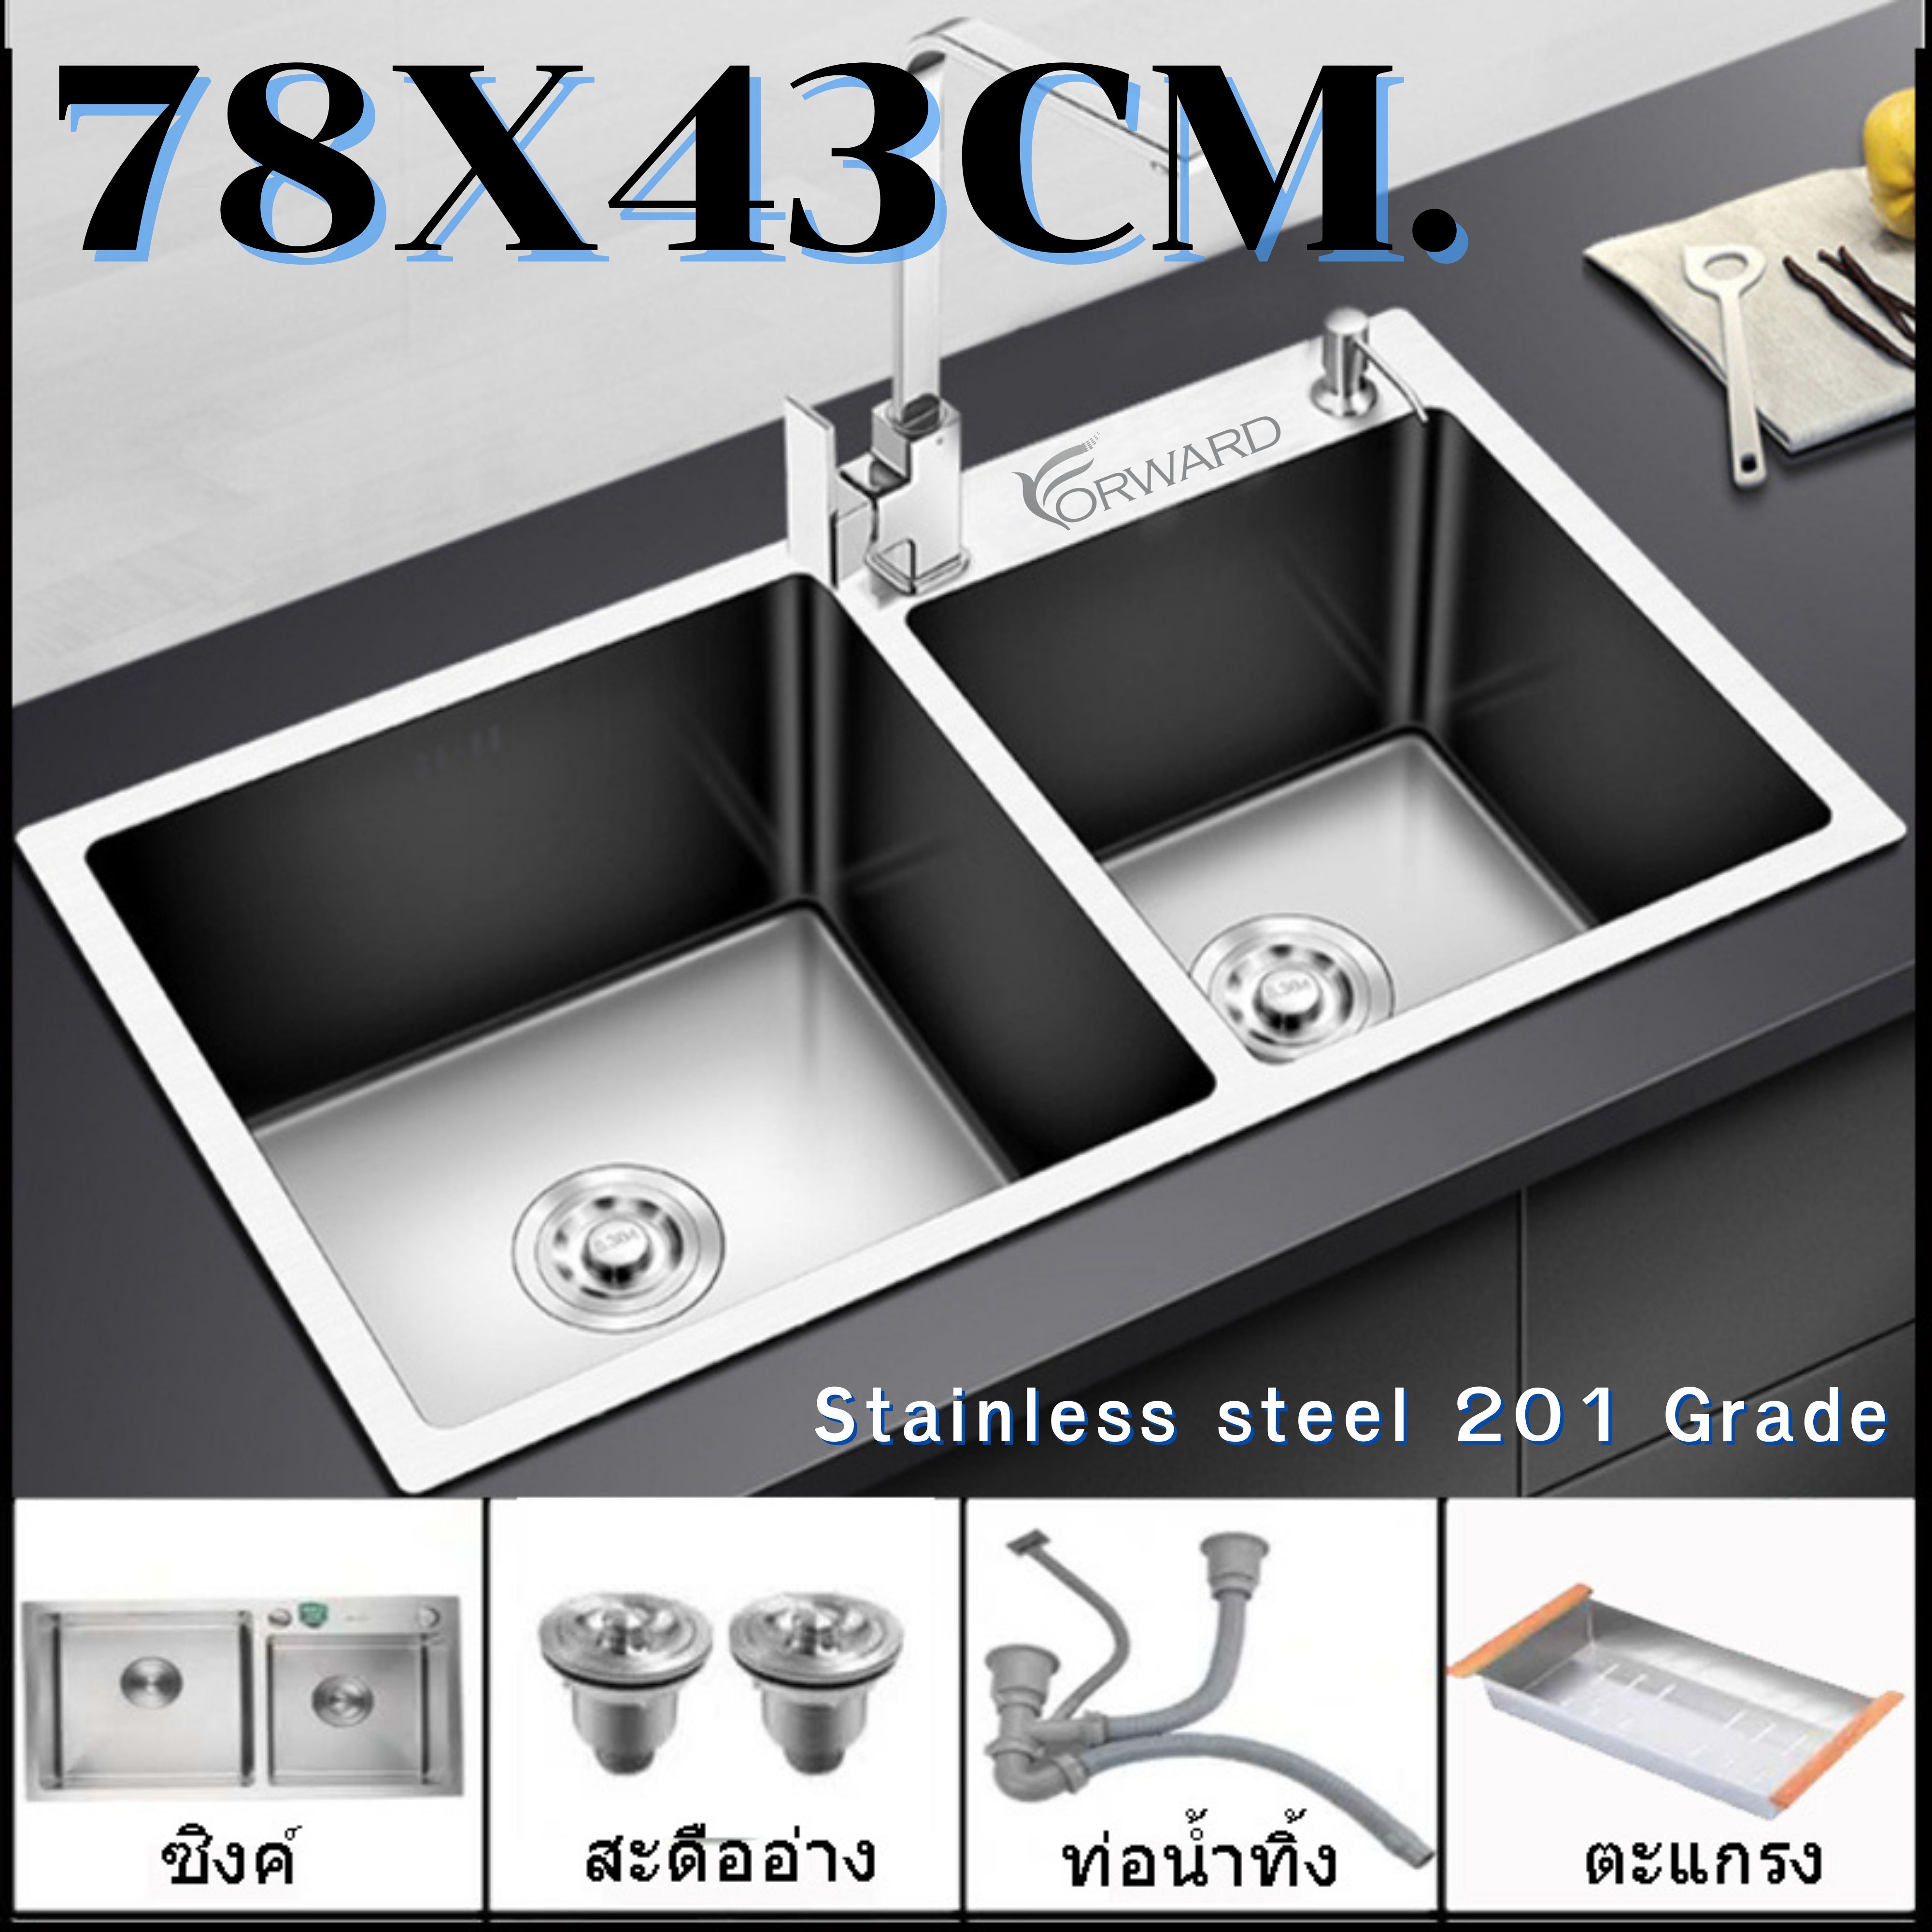 HM7843 Kitchen sink ,stainless steel,sink ซิงค์ ซิงค์ล้างจาน อ่างล้างจาน ซิงค์สแตนเลส201 อ่างล้างจานสแตนเลส ซิงค์สแตนเลส สแตนเลส201